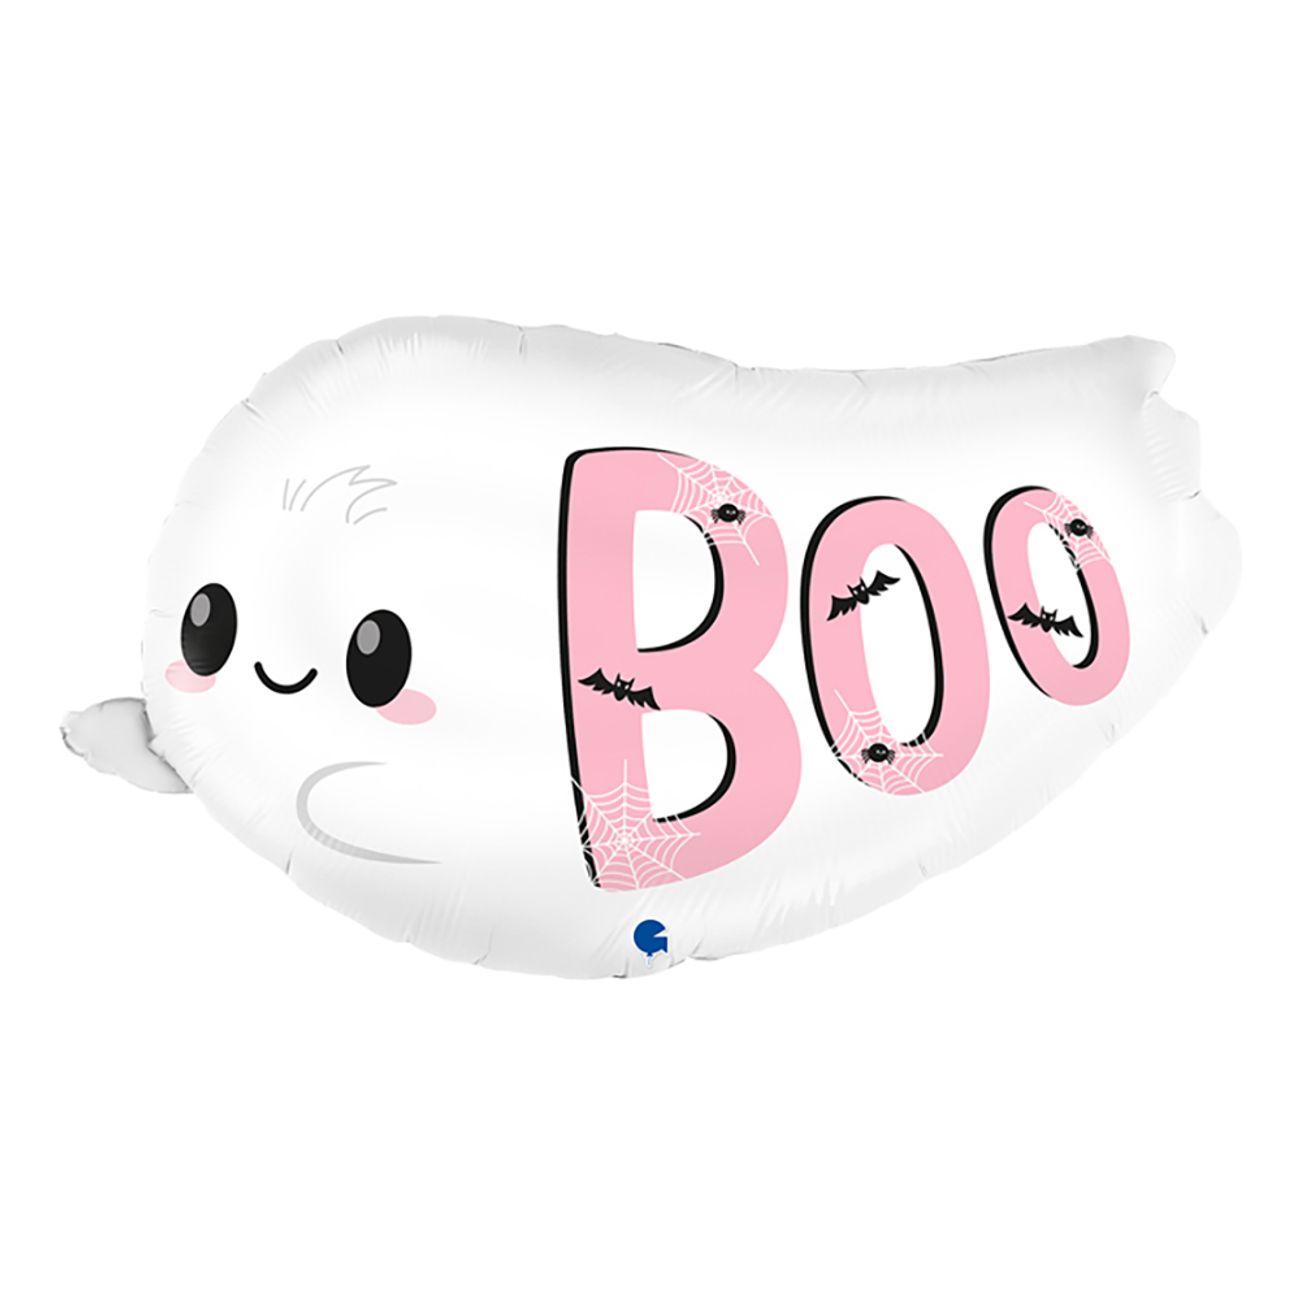 folieballong-chubby-boo-ghost-77600-1